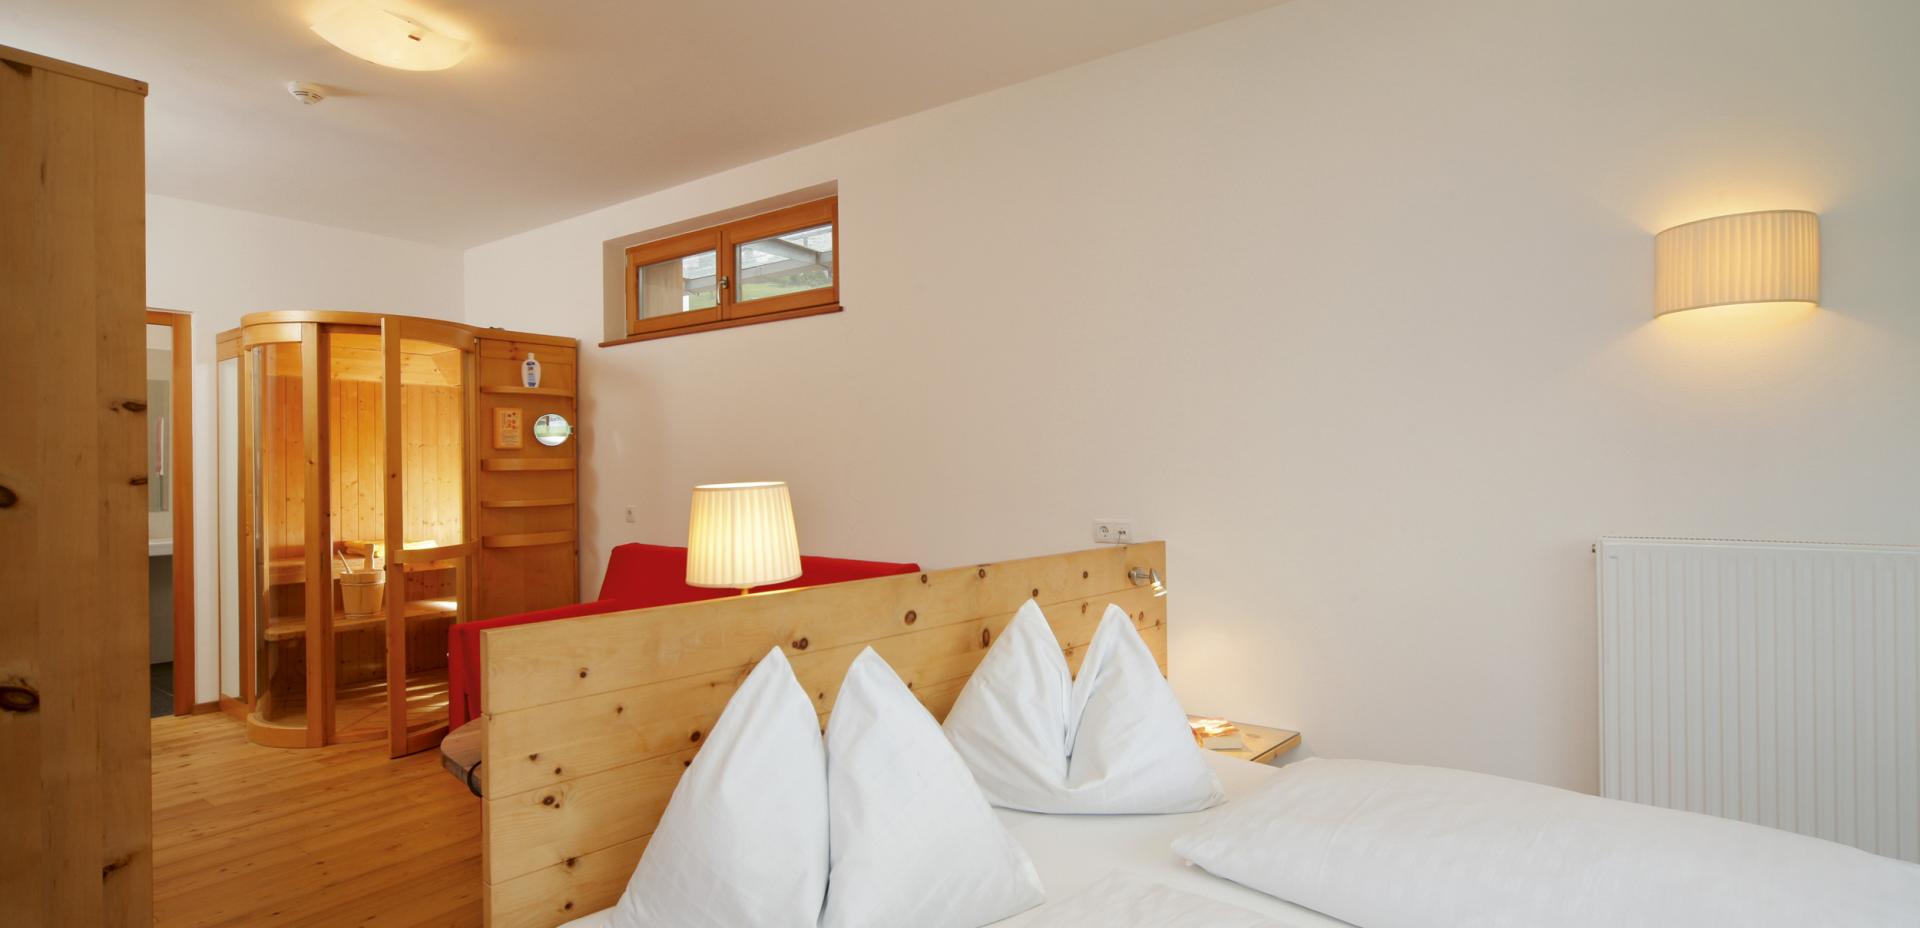 Luxury room with sauna